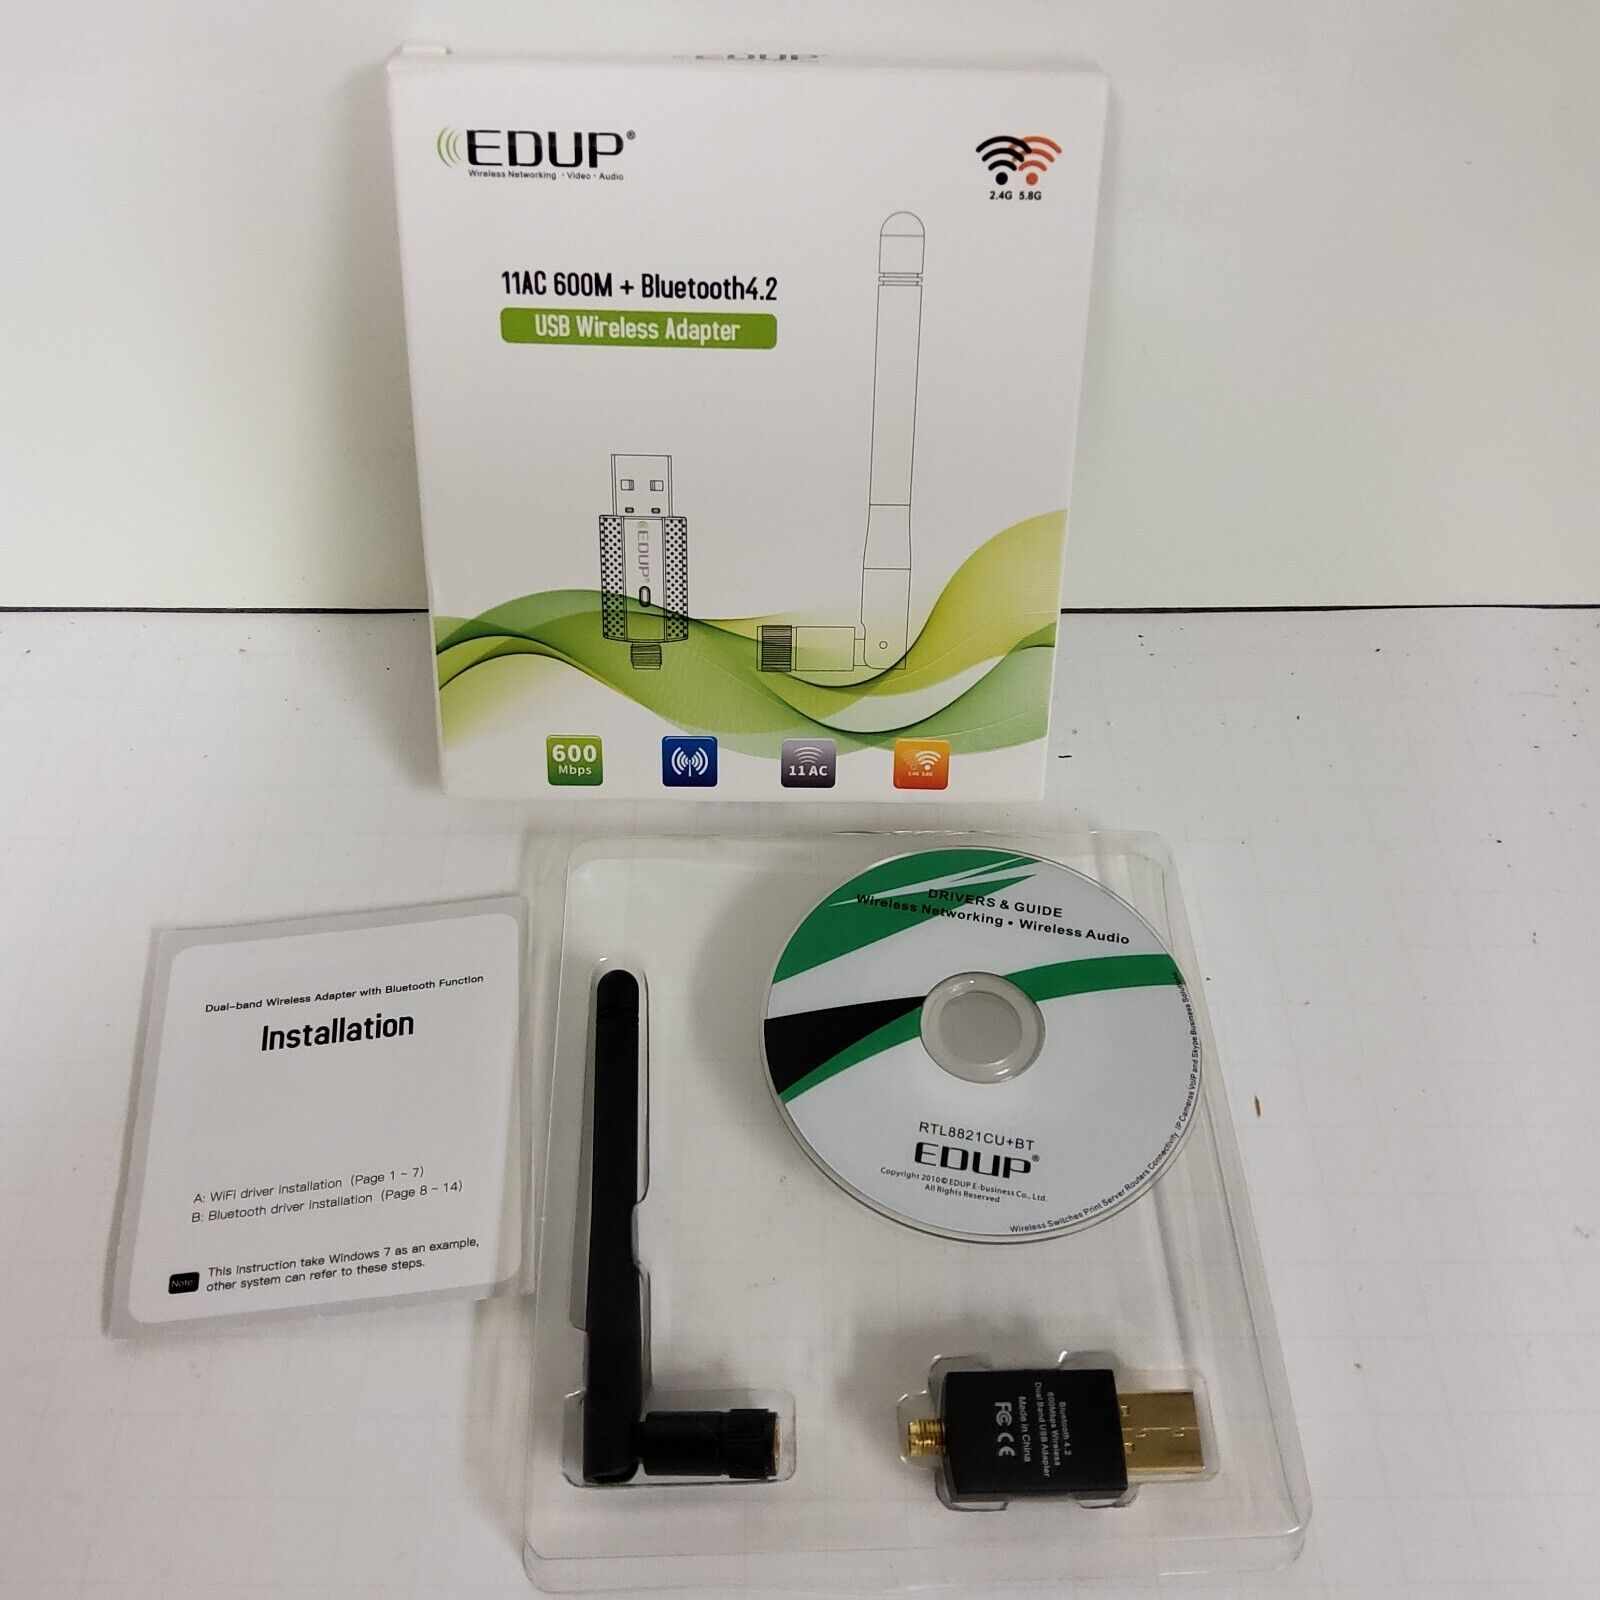 EDUP AC600Mbps 5.8Ghz/2.4Ghz Dual Band Wireless USB WIFI Adapter -...